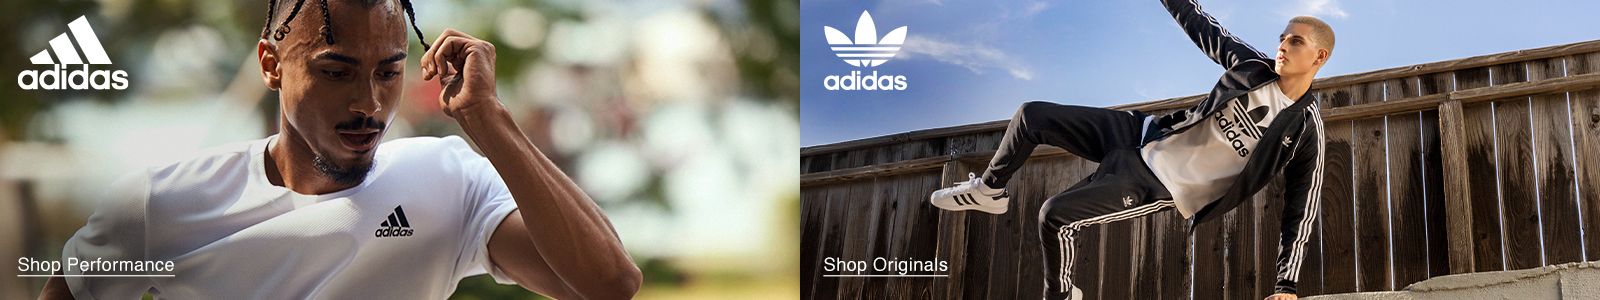 Adidas, Shop Performance, Shop Originals